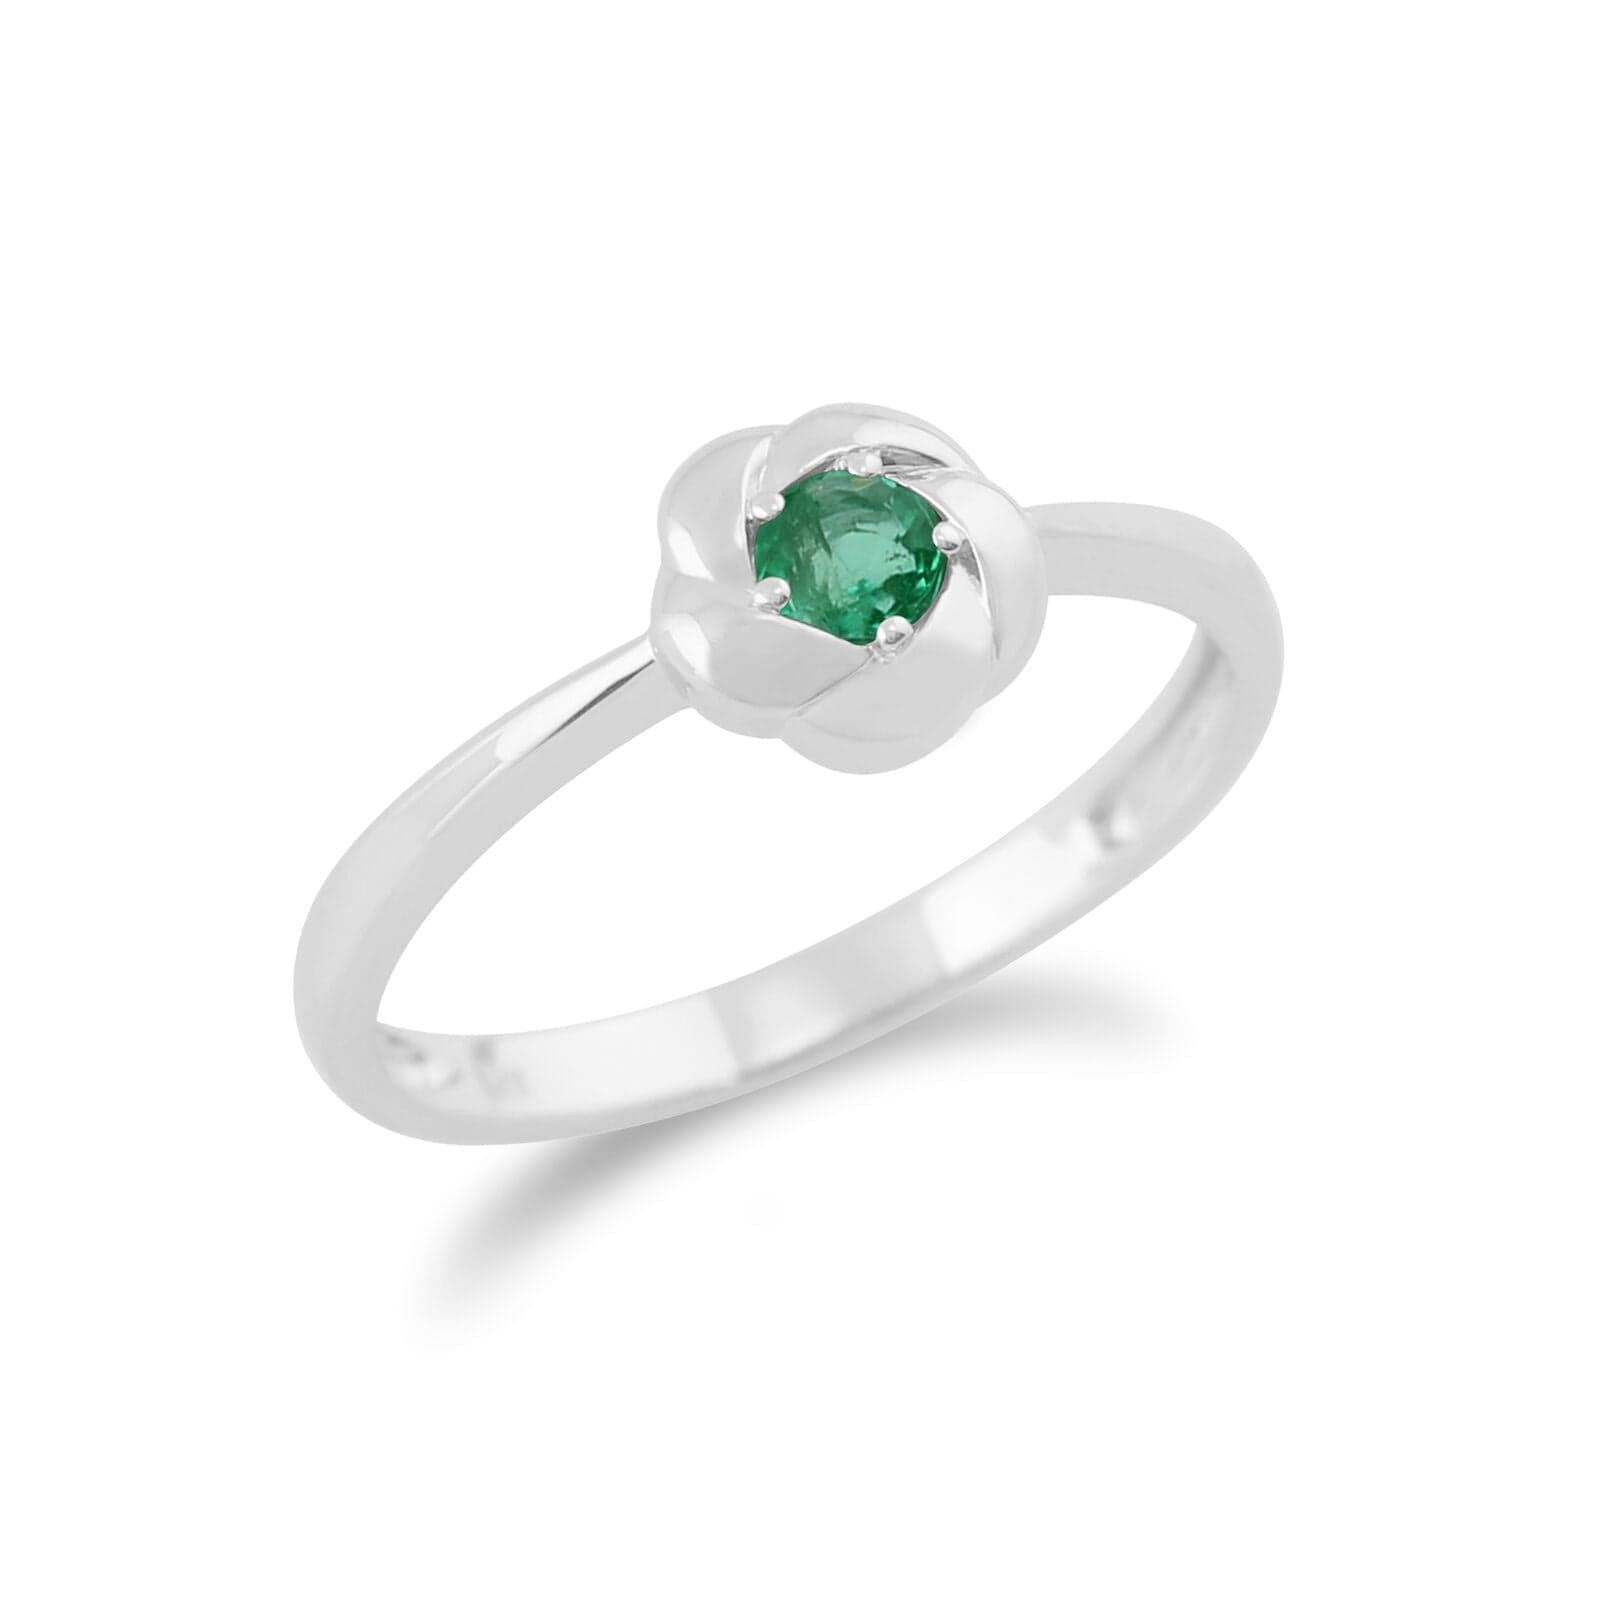 Gemondo Plaited Texture 9ct White Gold 0.16ct Emerald Ring - Gemondo